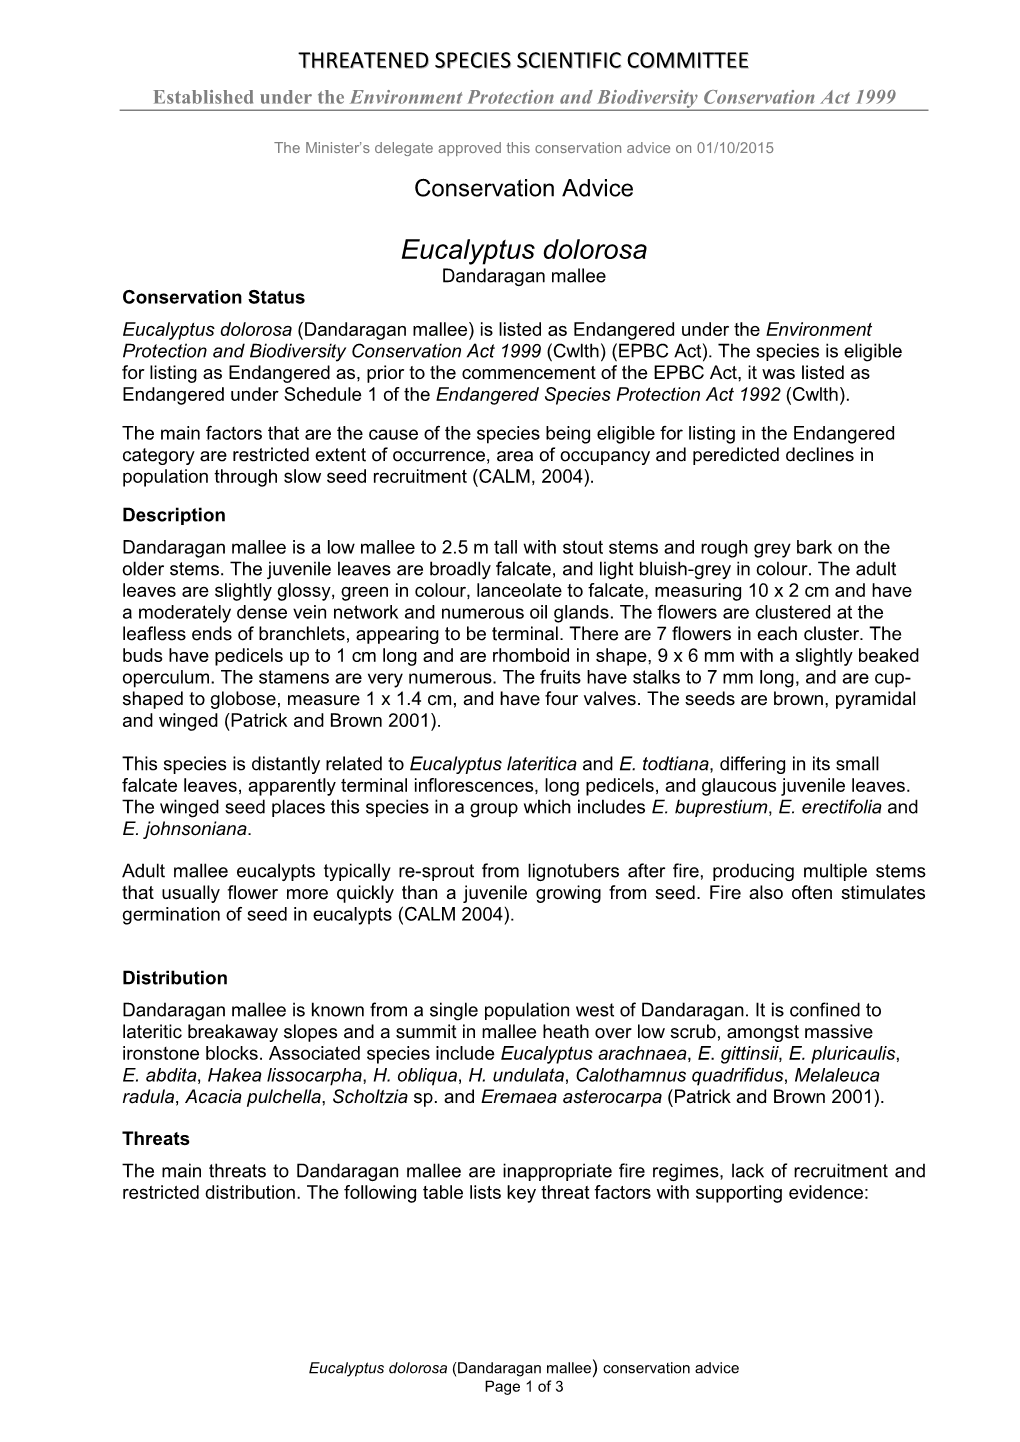 Conservation Advice Eucalyptus Dolorosa